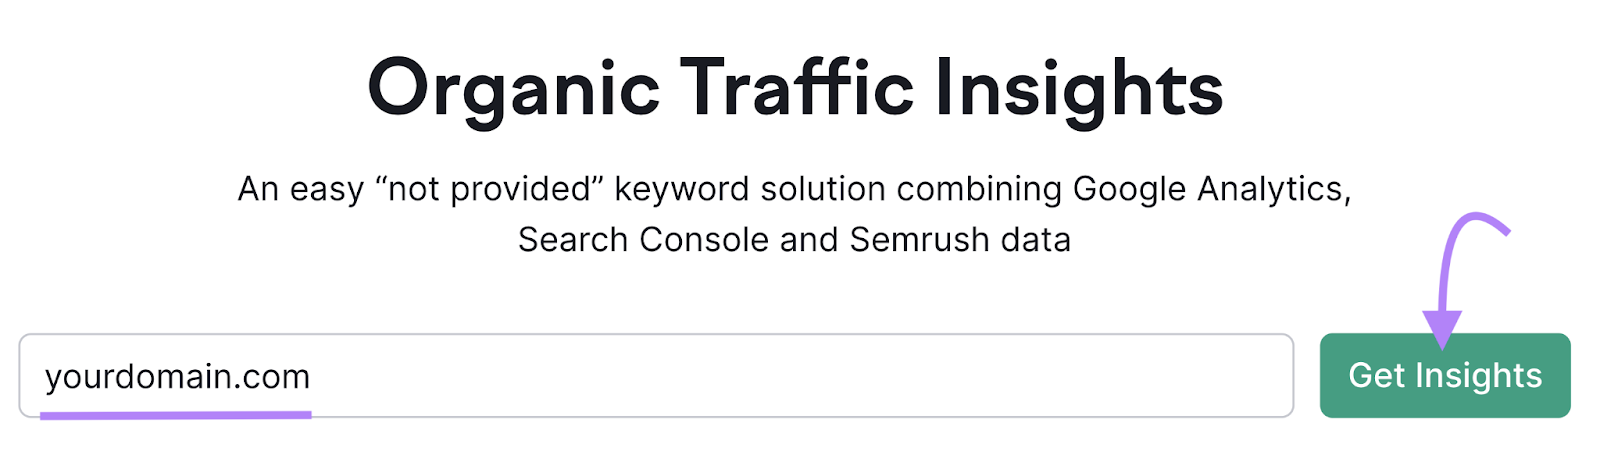 Organic Traffic Insights tool search bar